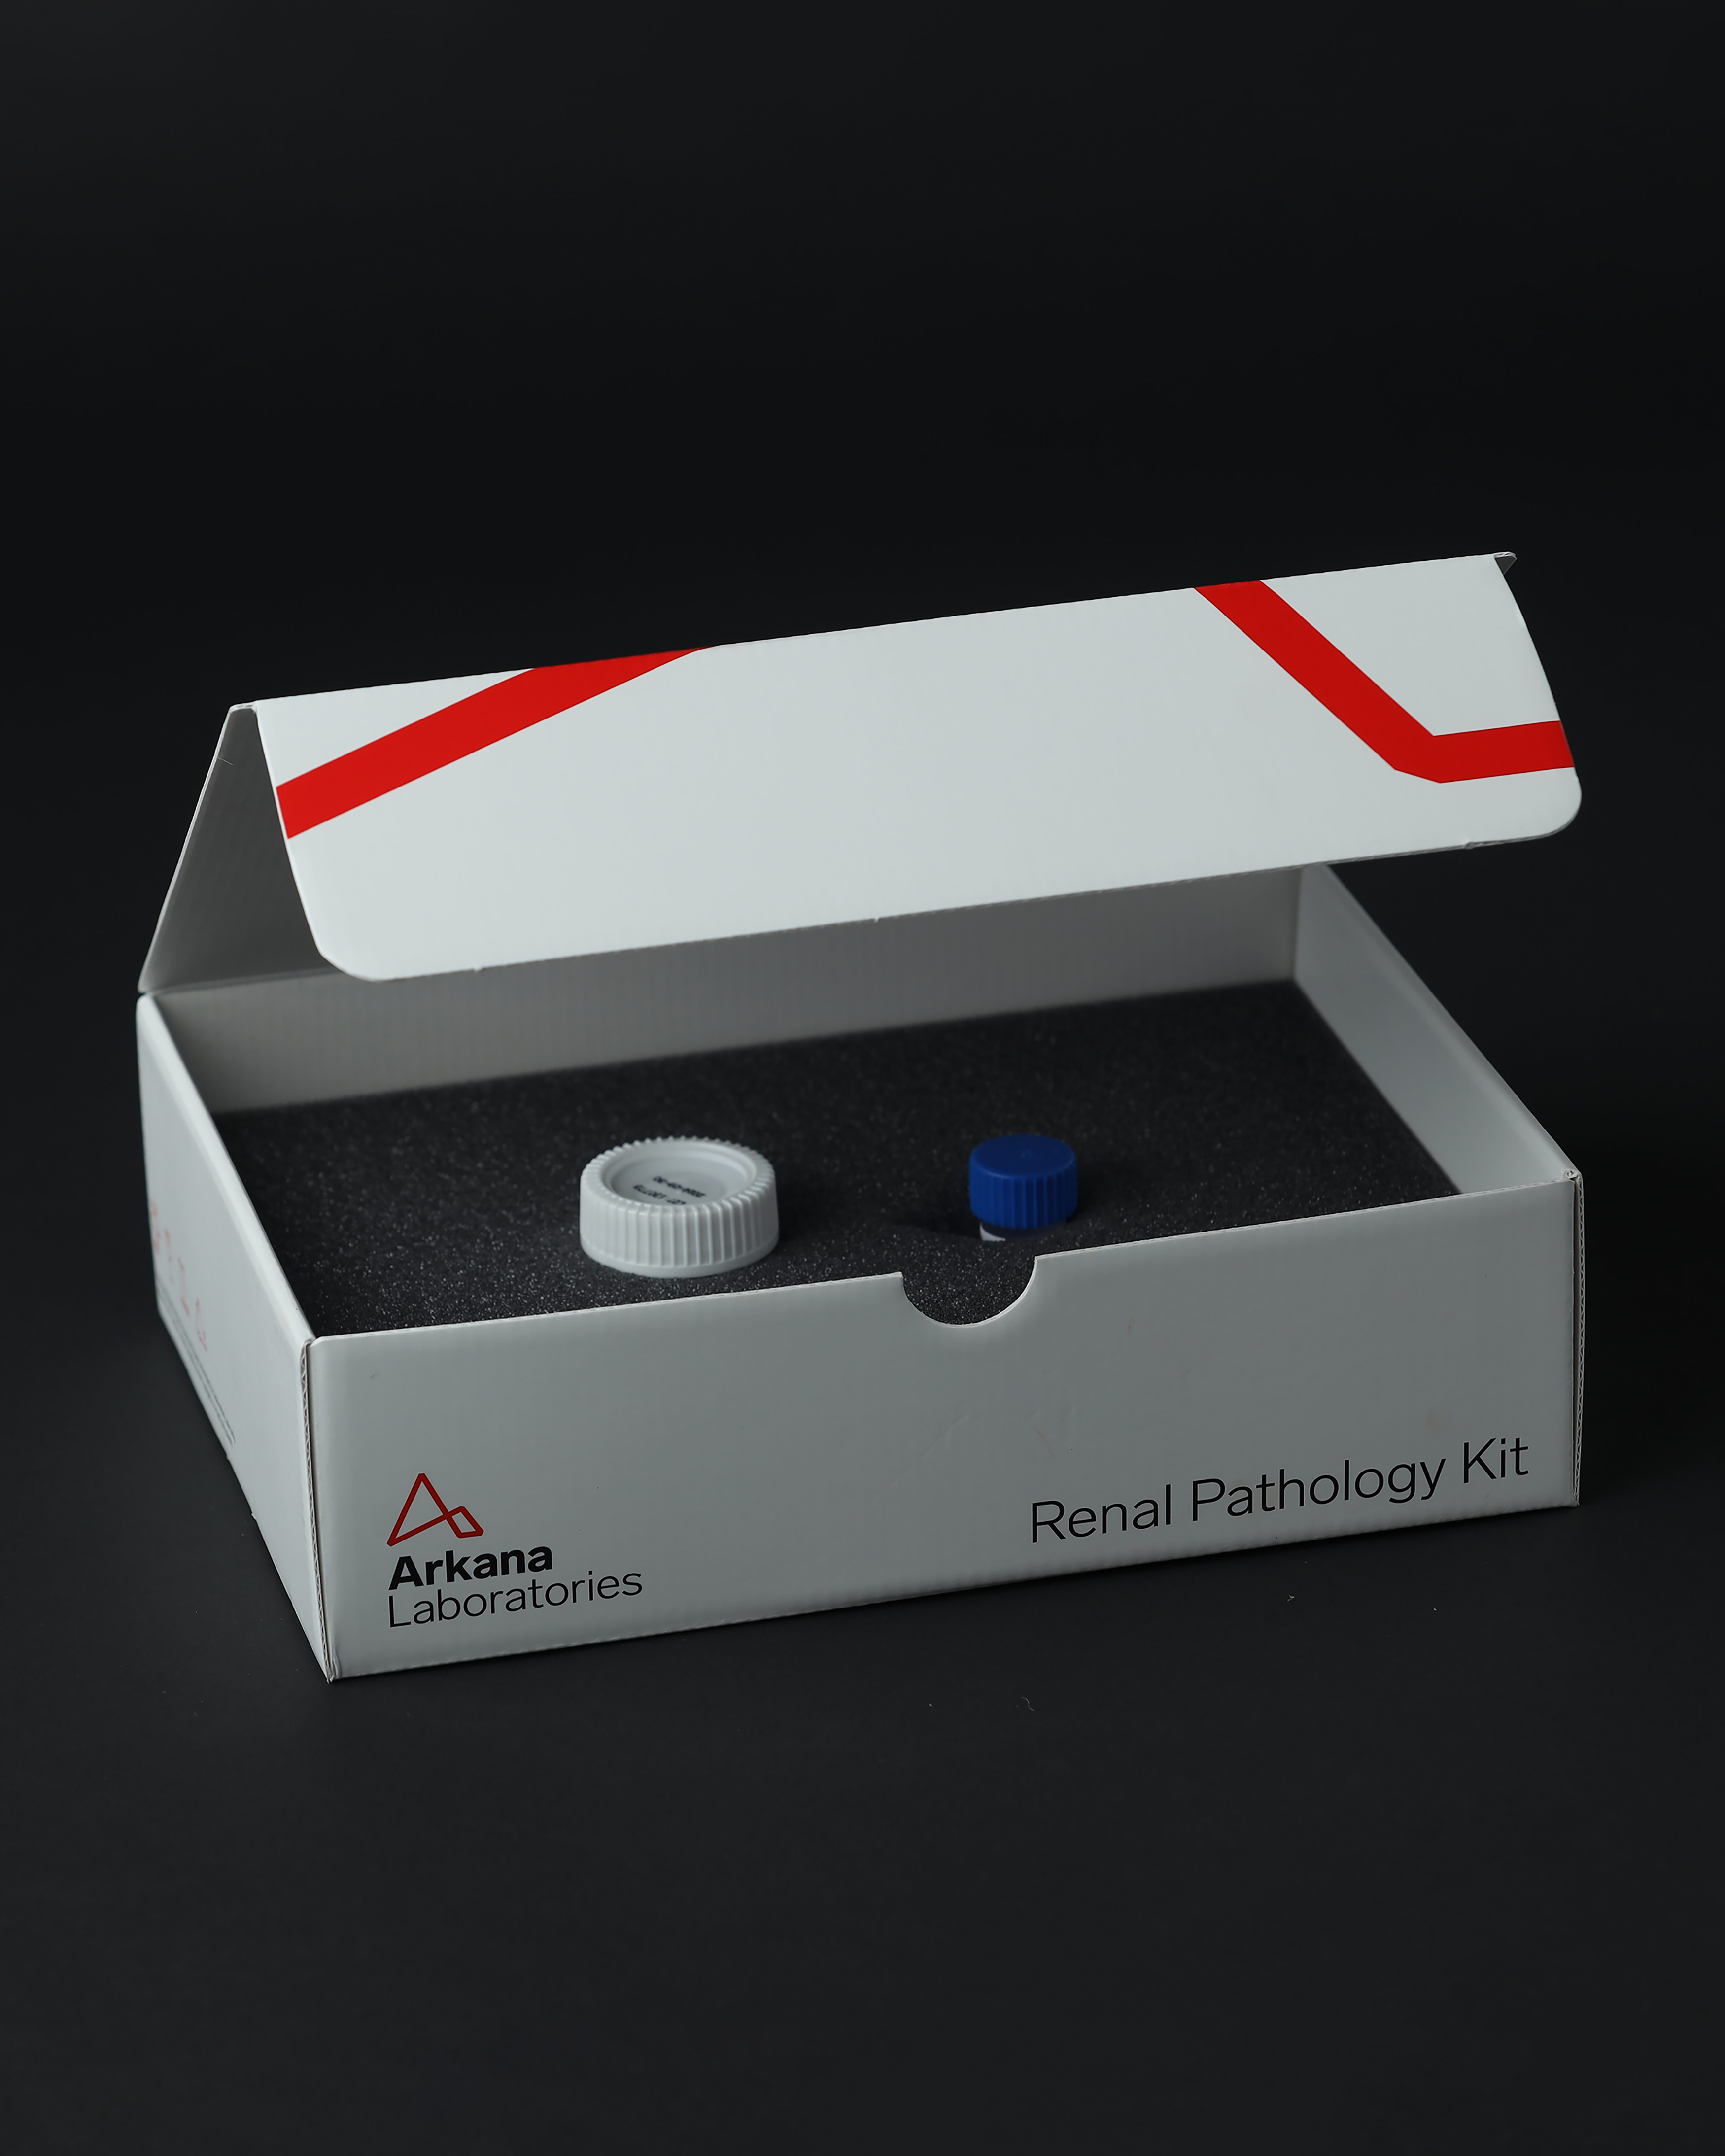 renal biopsy kit from arkana laboratories showing biopsy bottles